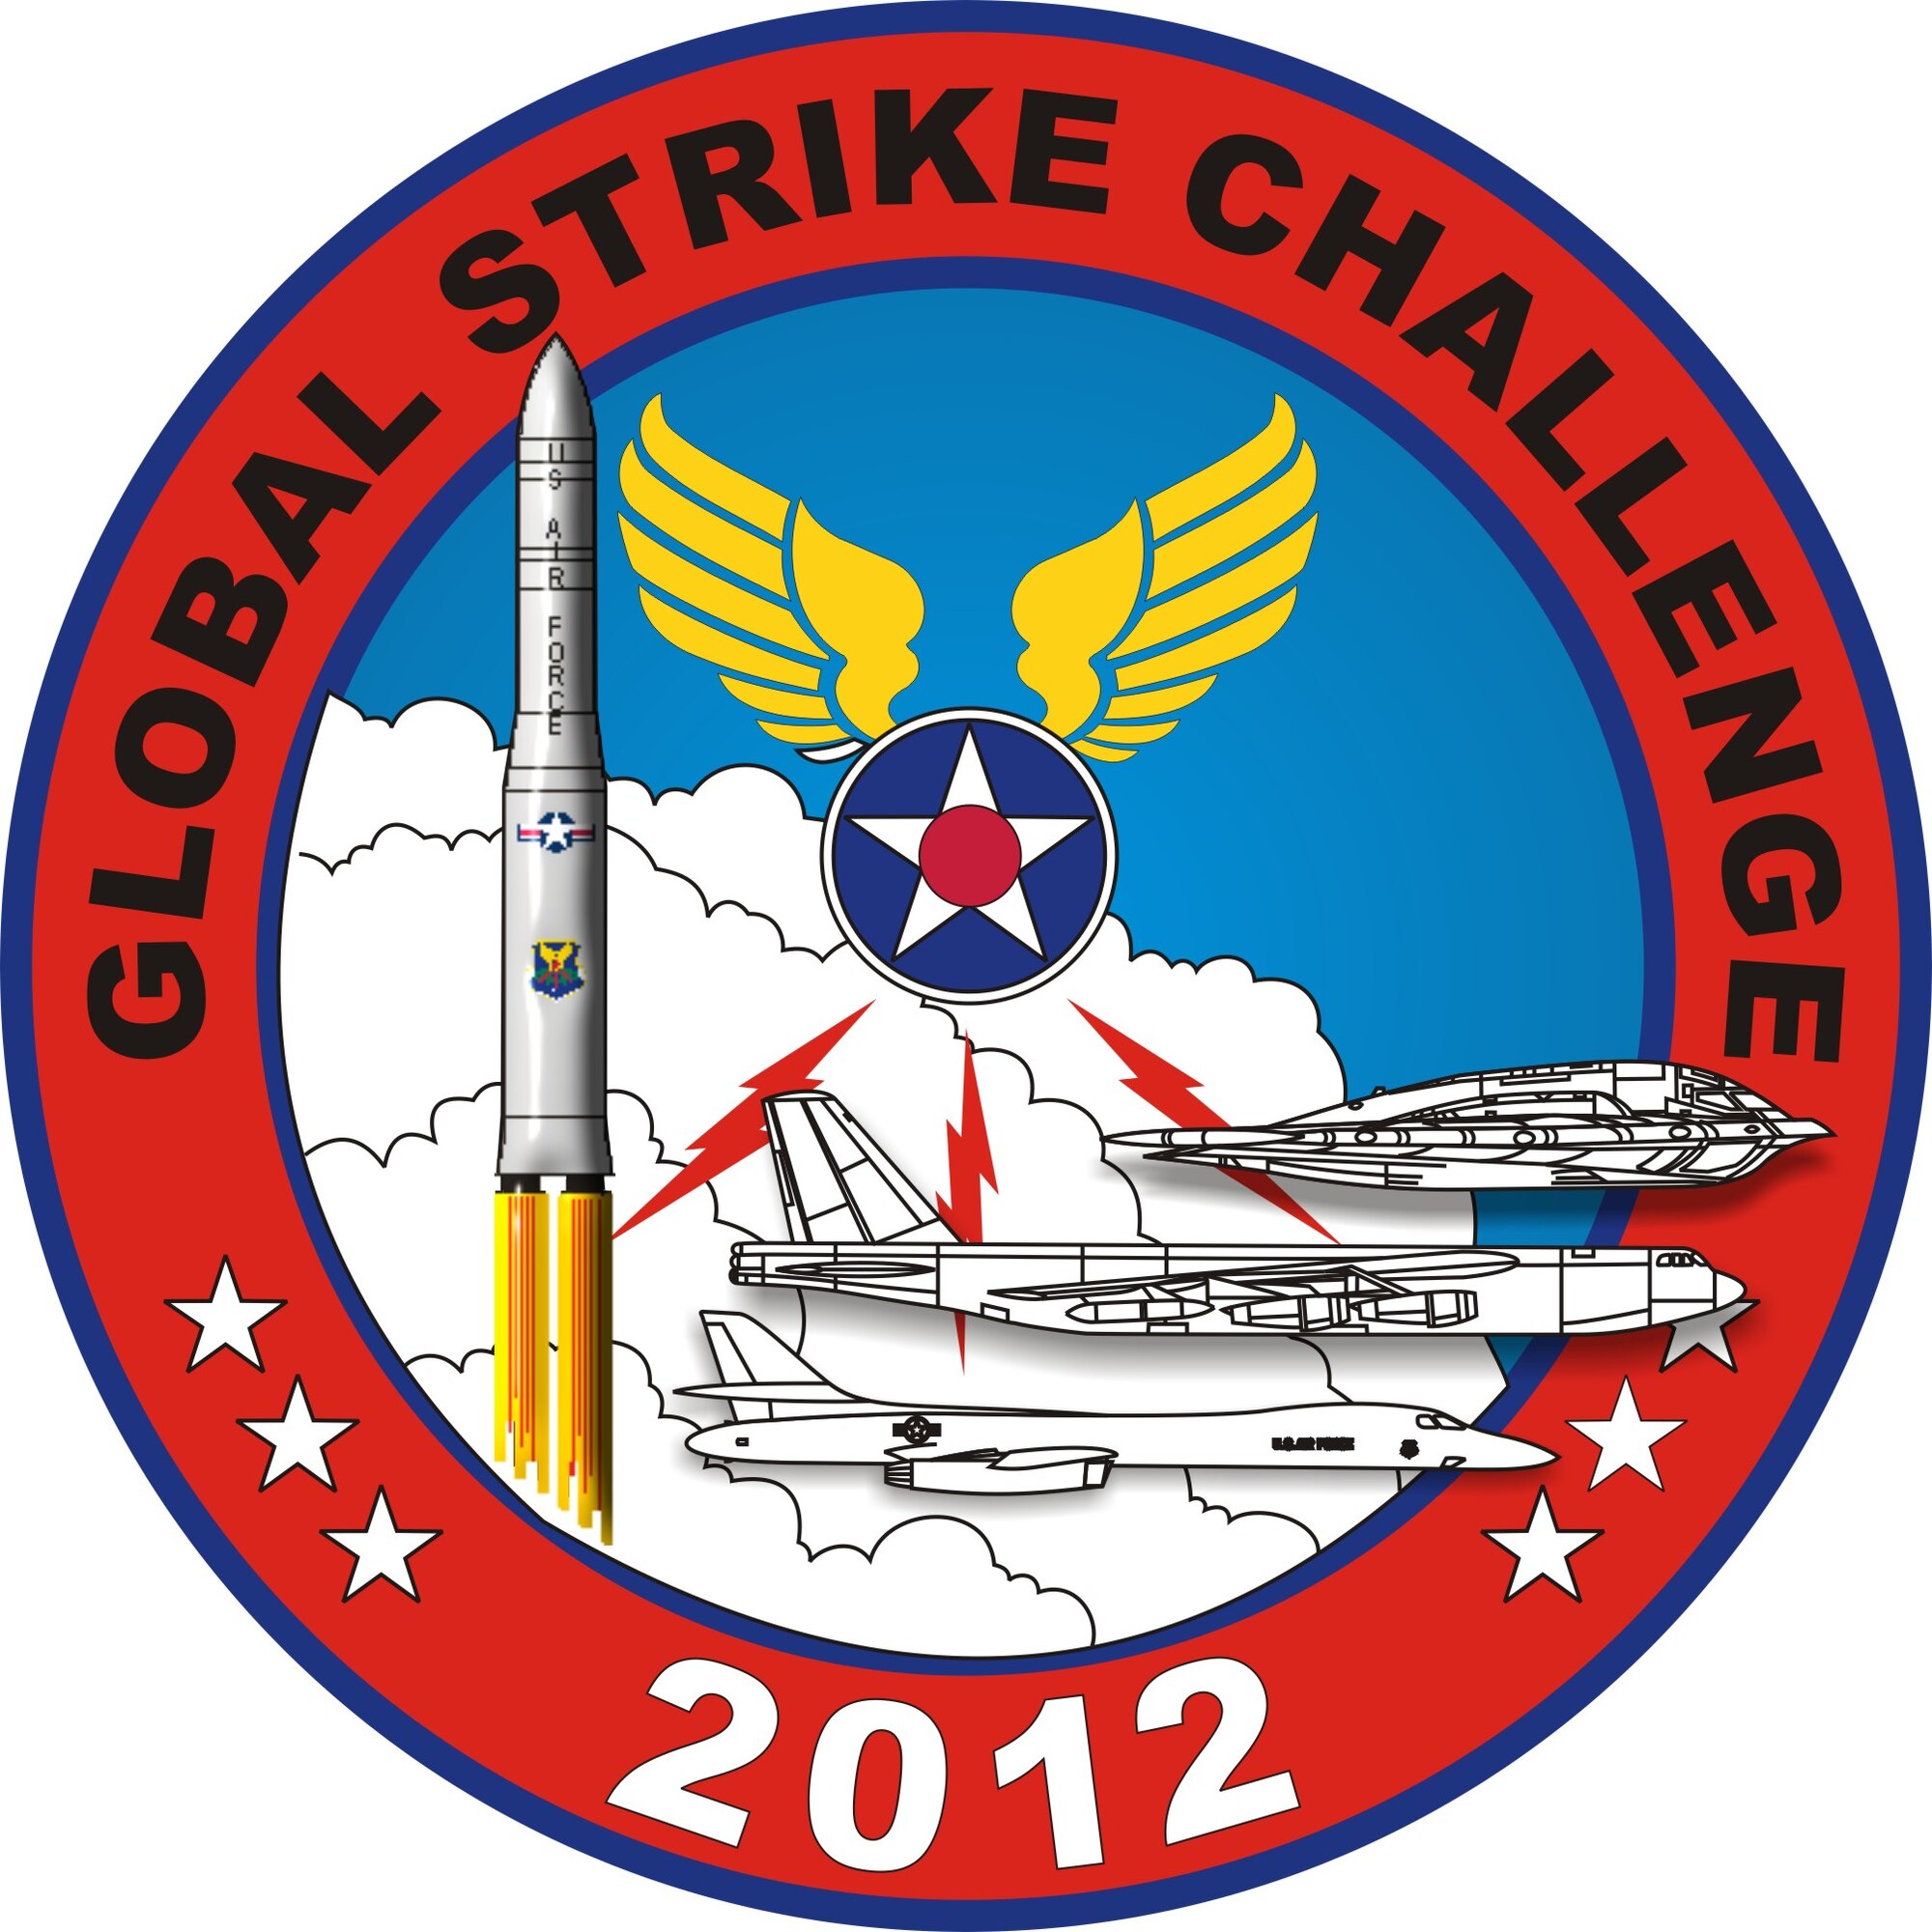 Global Strike Challenge 2012